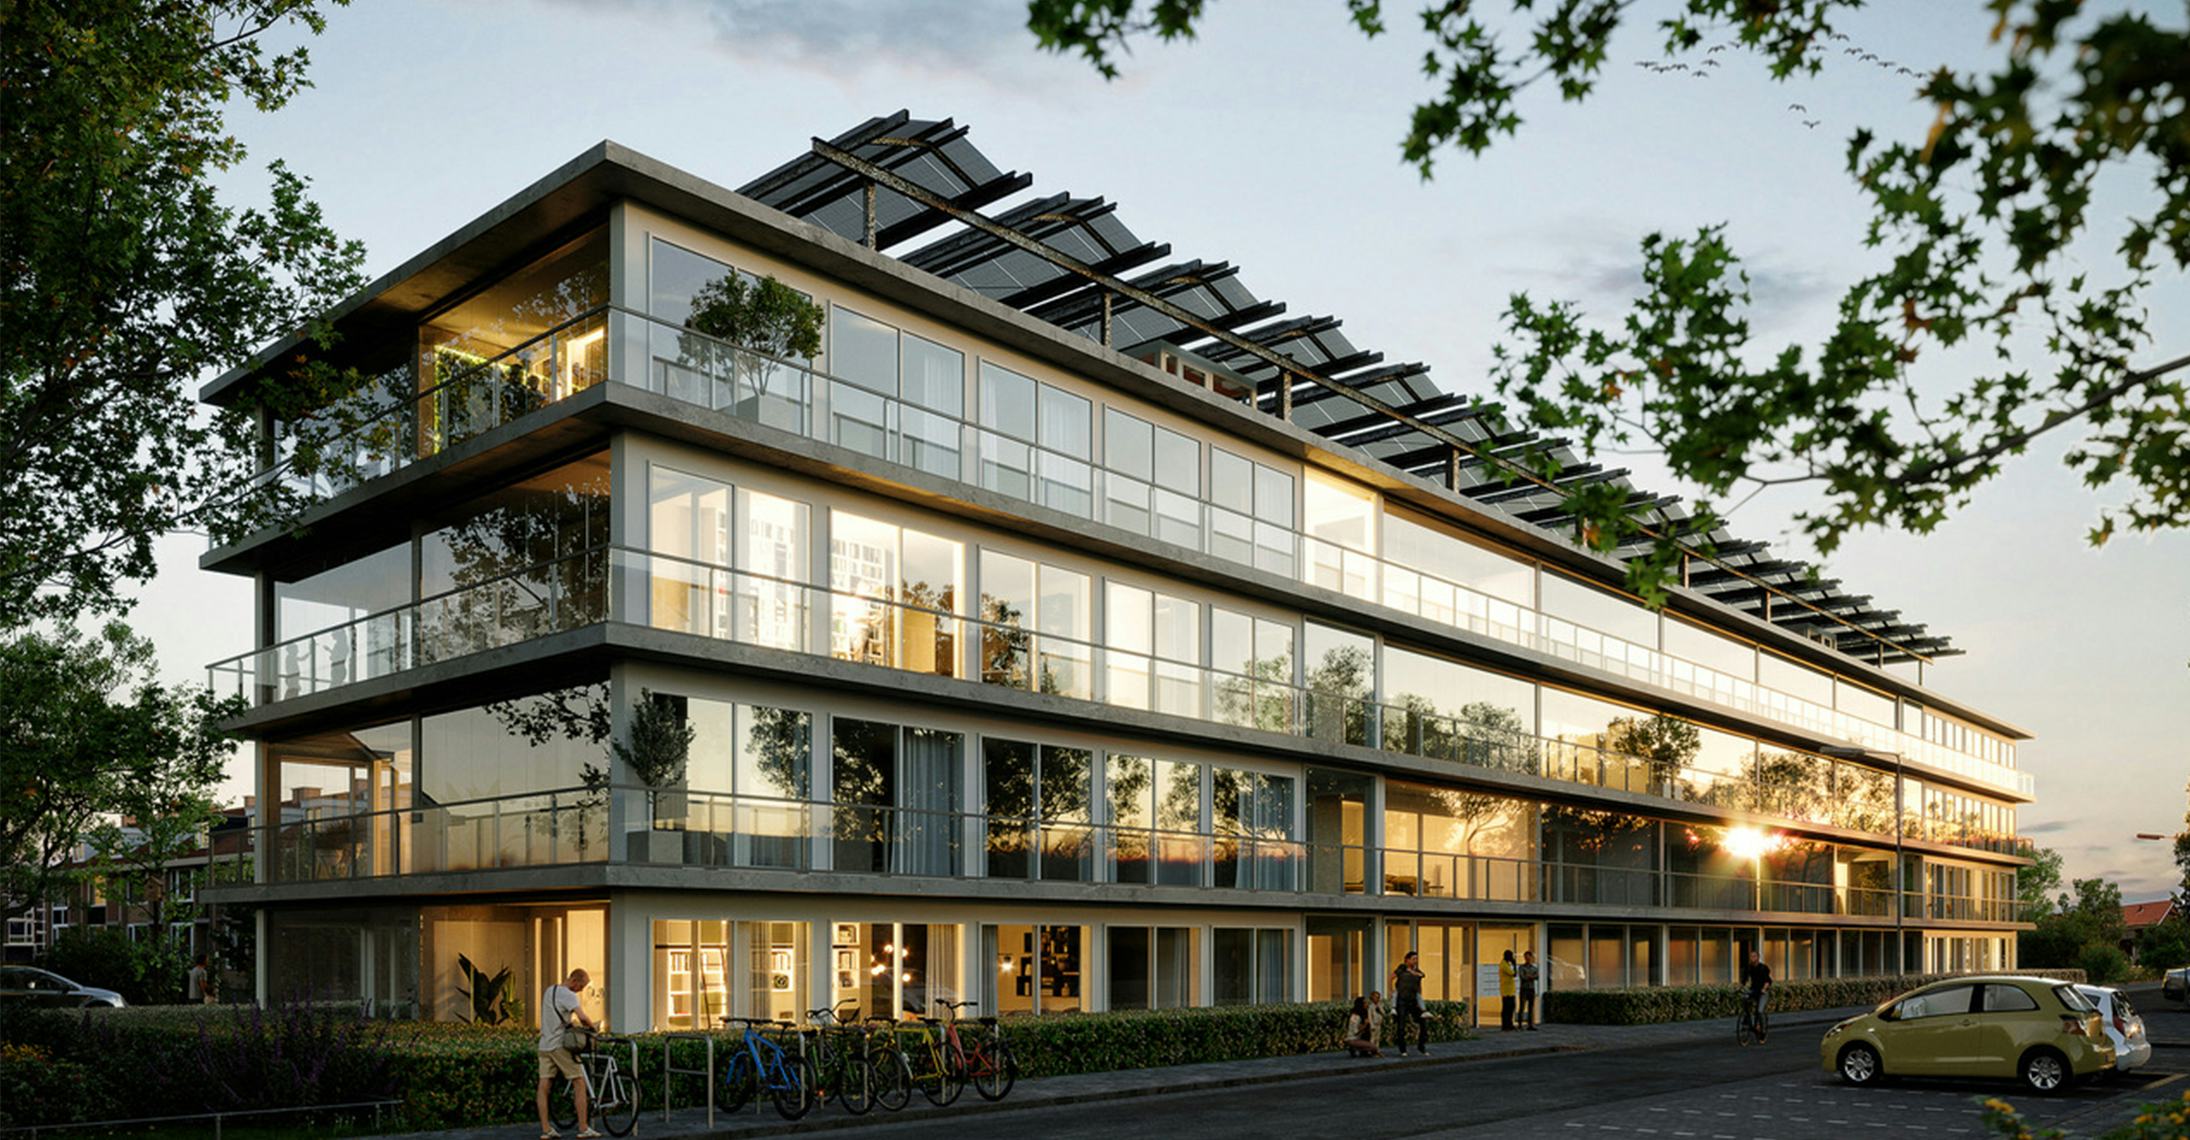 KAW bouwt klimaatadaptieve, sociale huur in Gestelse buurt in Den Bosch